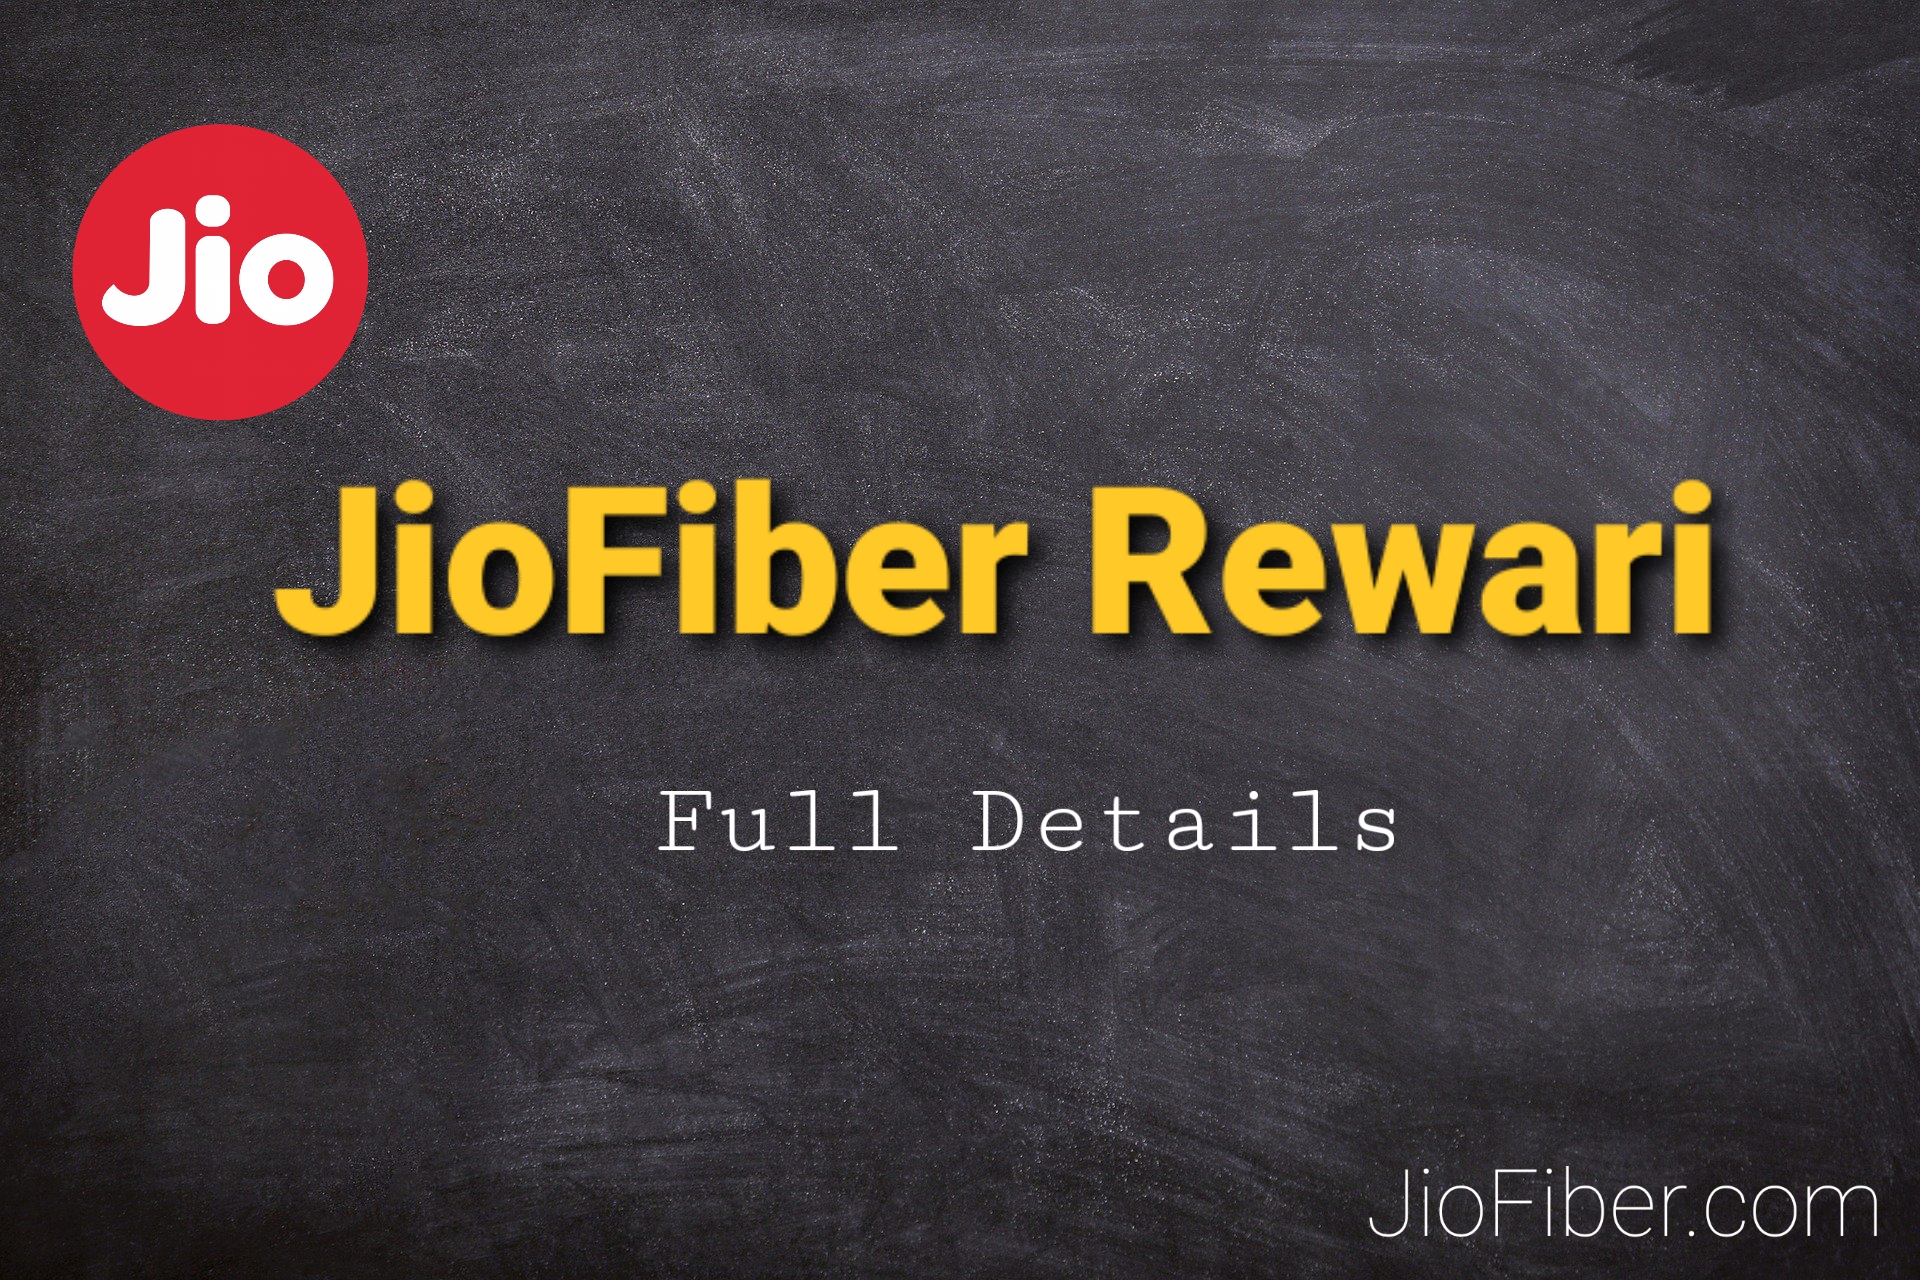 Jio Fiber Rewari - Cheap WiFi Plans, Offers, Customer Care